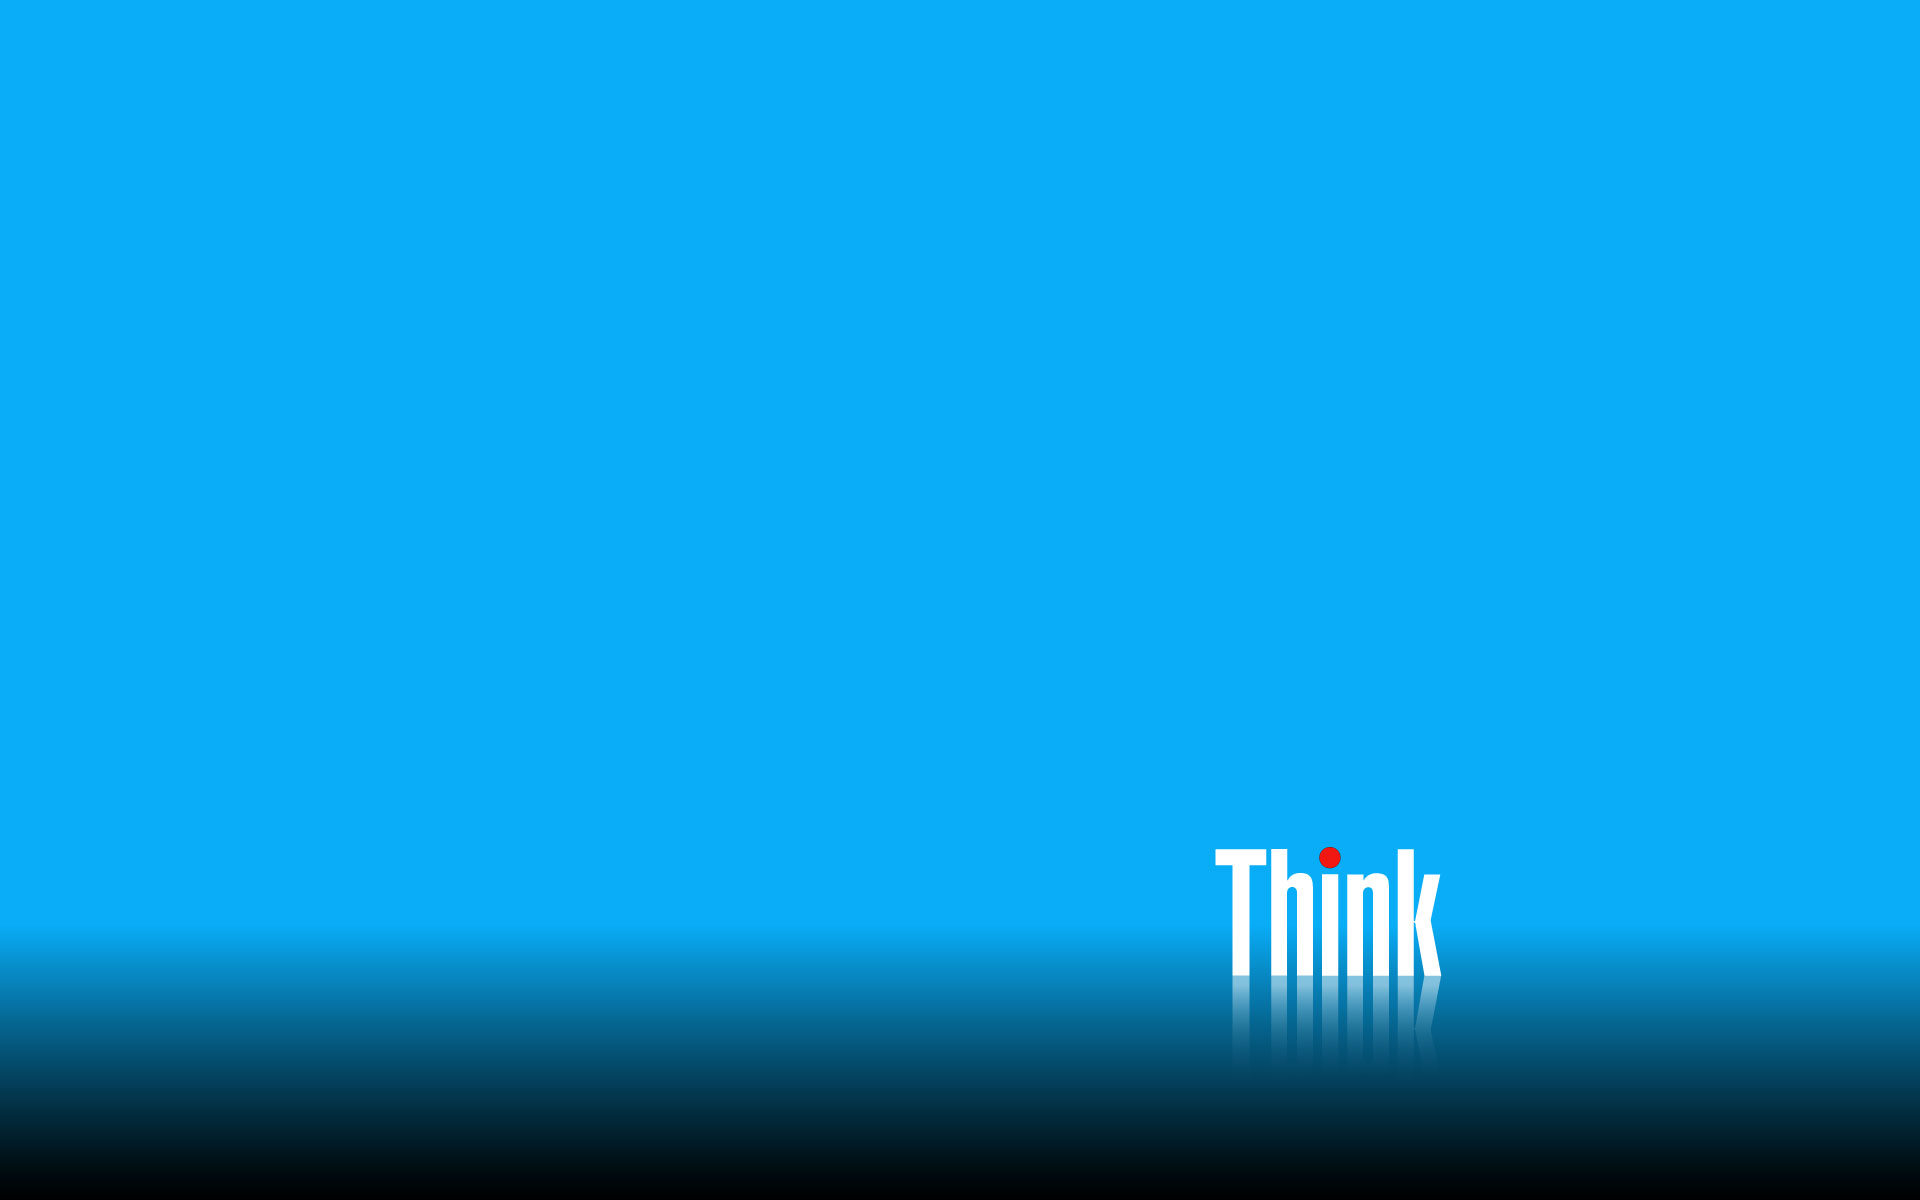 web background backgrounds thinkpad thinkblue review lenovo imagesjpg